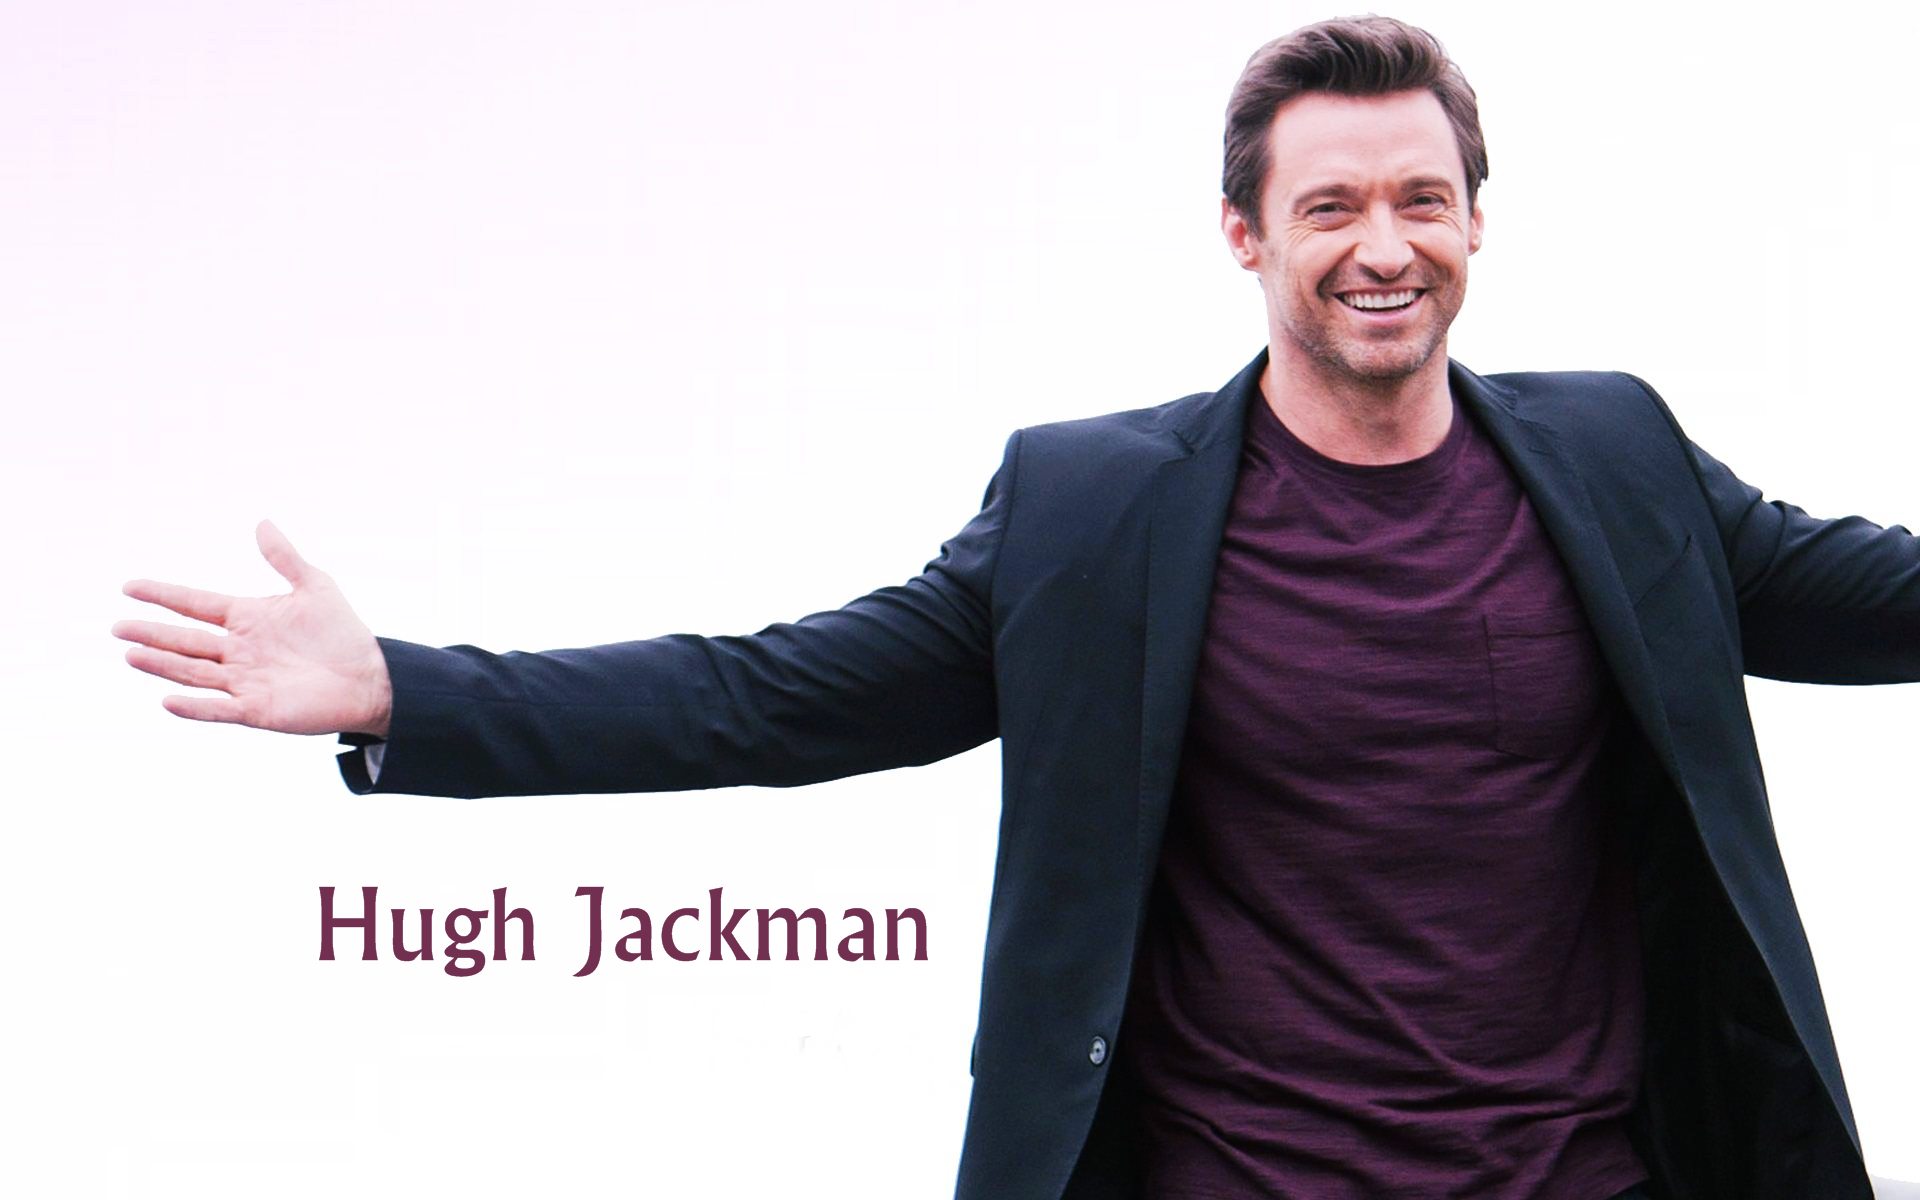 Hugh Jackman Wallpaper Pictures Image